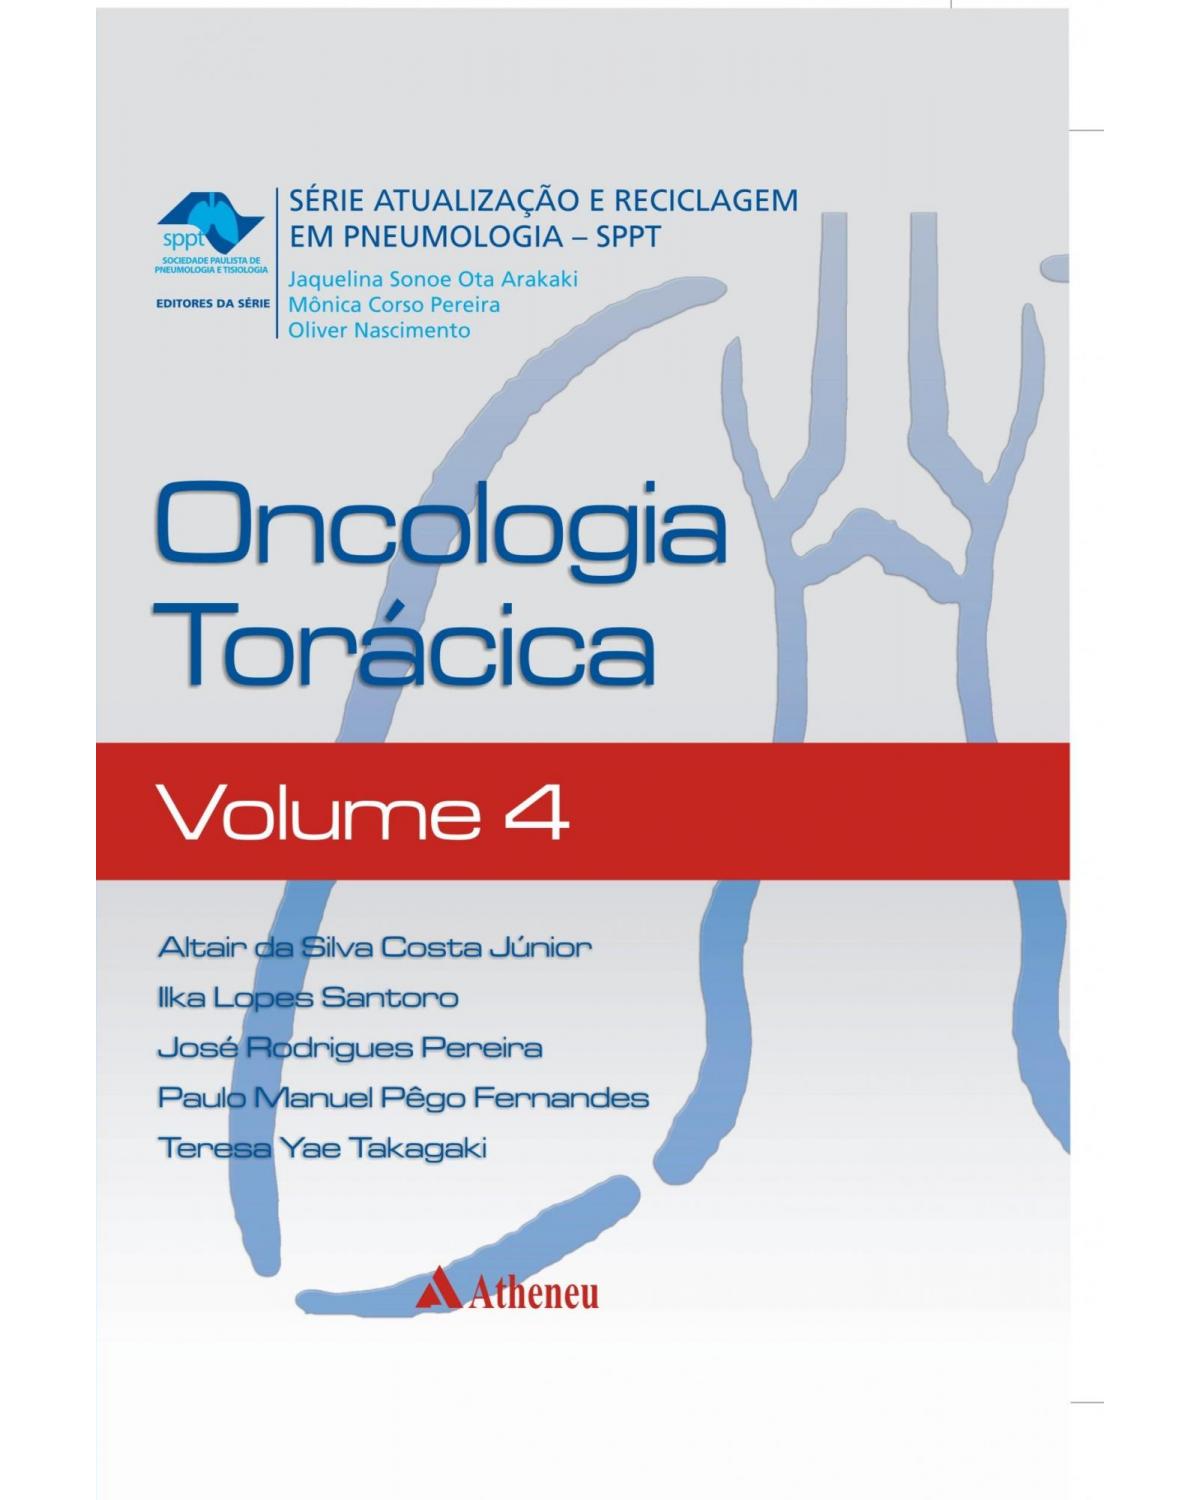 Oncologia torácica - Volume 4:  - 1ª Edição | 2011